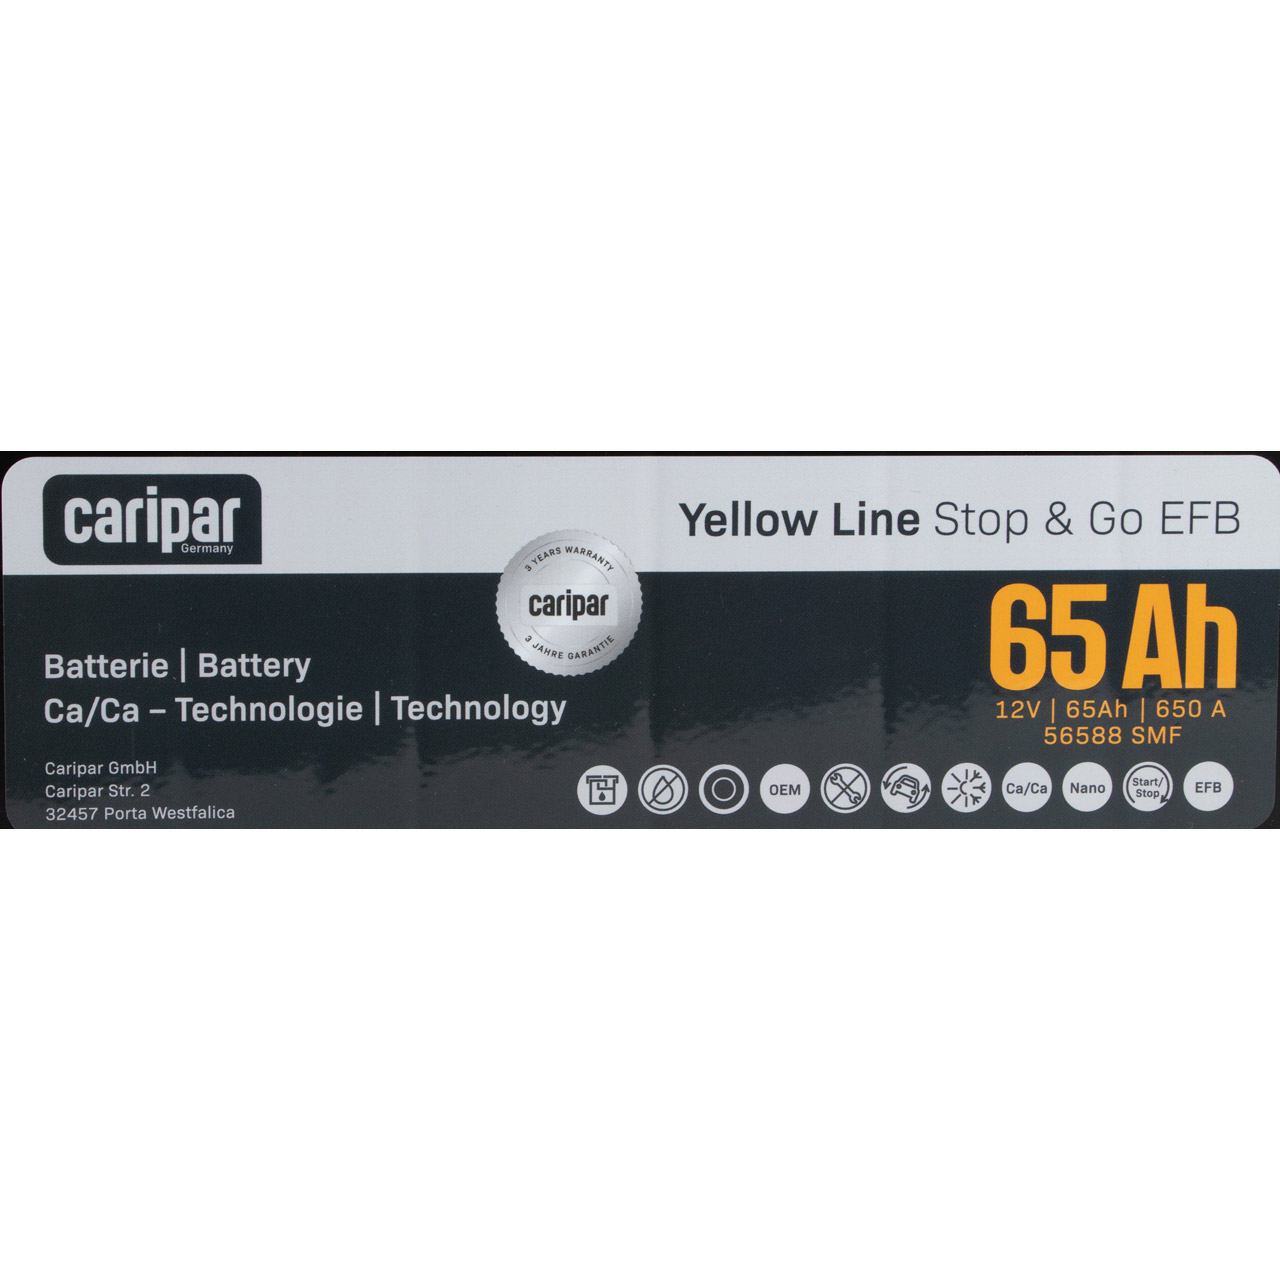 CARIPAR YELLOW LINE Start Stop EFB Autobatterie Starterbatterie 12V 65Ah 650A/EN